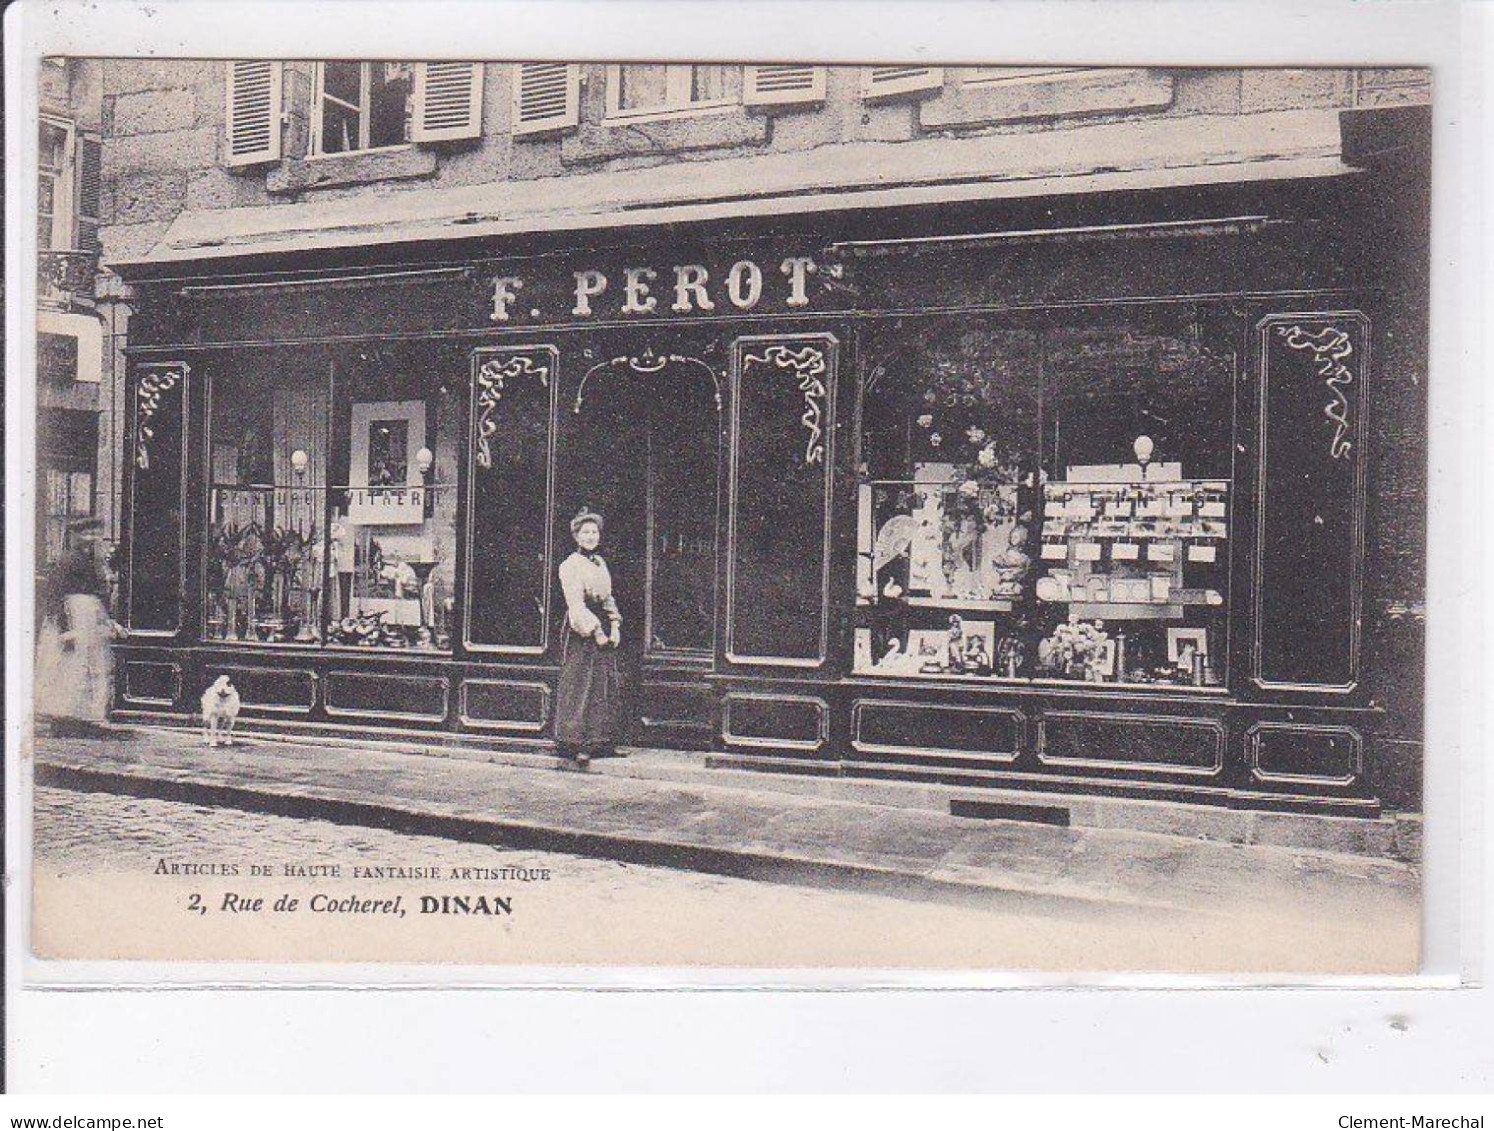 DINAN: F. Perot 2 Rue De Cocherel (magasin De Haute Fantaisie Artistique) - Très Bon état - Dinan